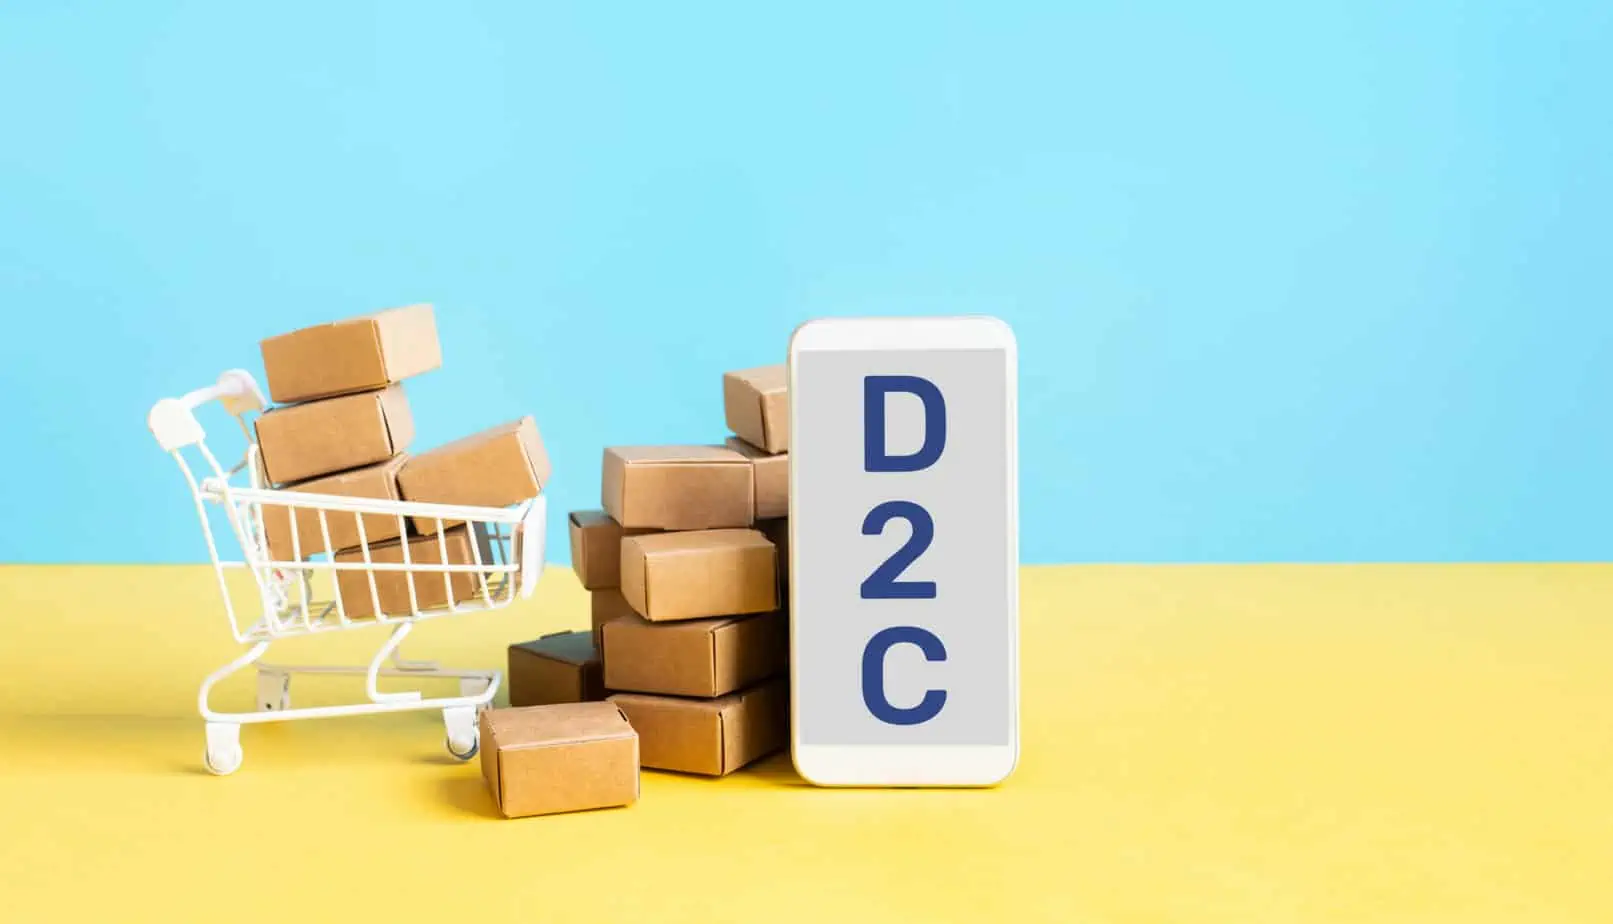 d2c ecommerce brands struggle